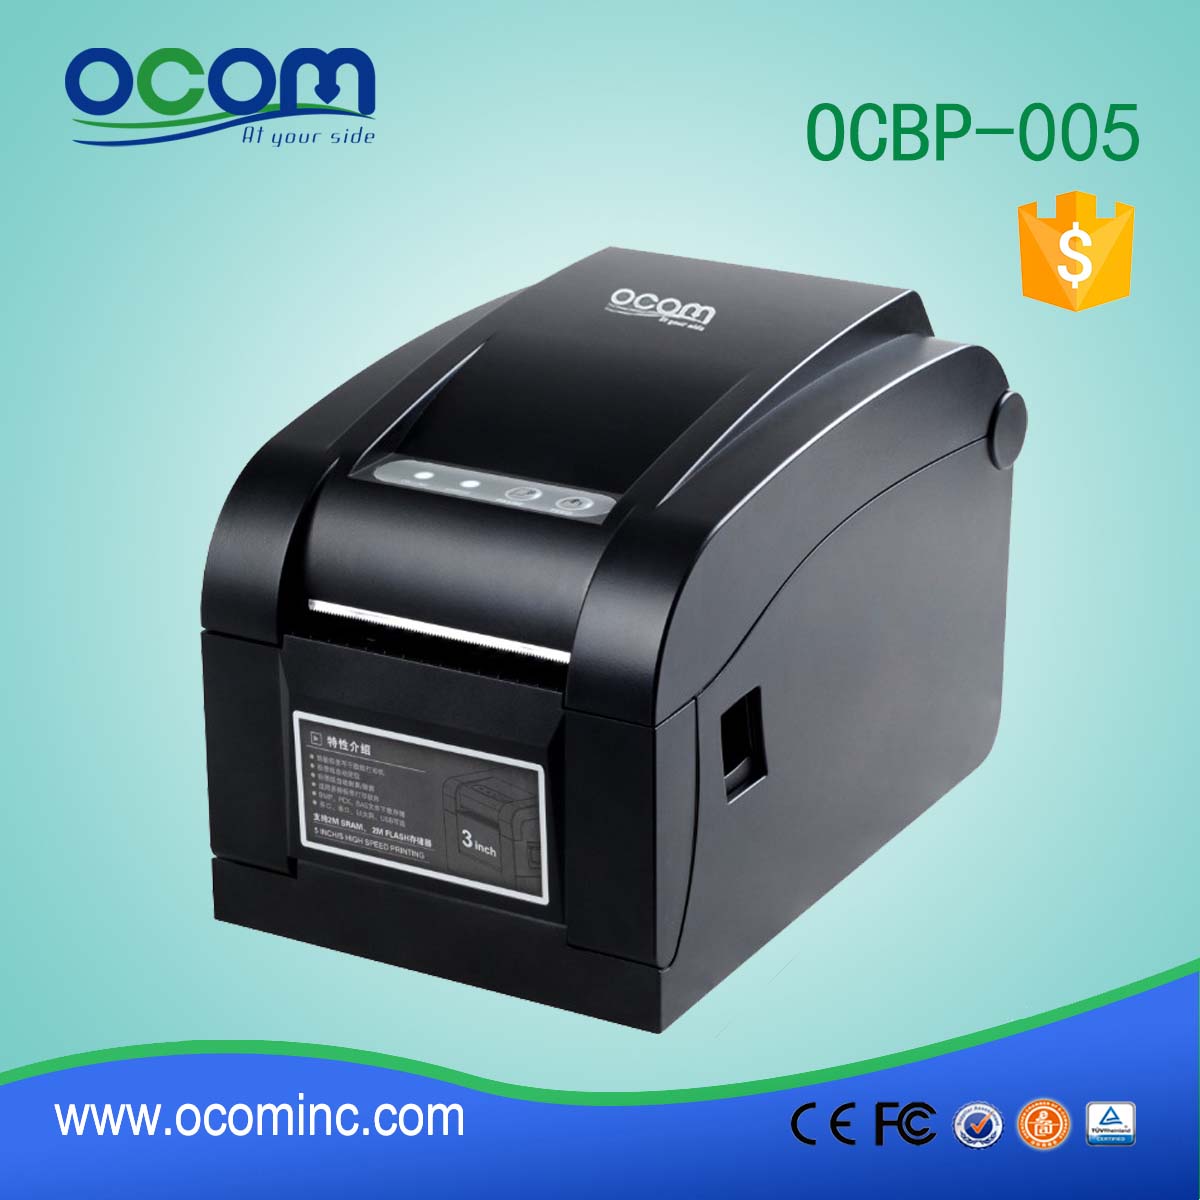 OCBP-005-U 3 "Thermo-Barcode-Etikettendrucker USB-Schnittstelle